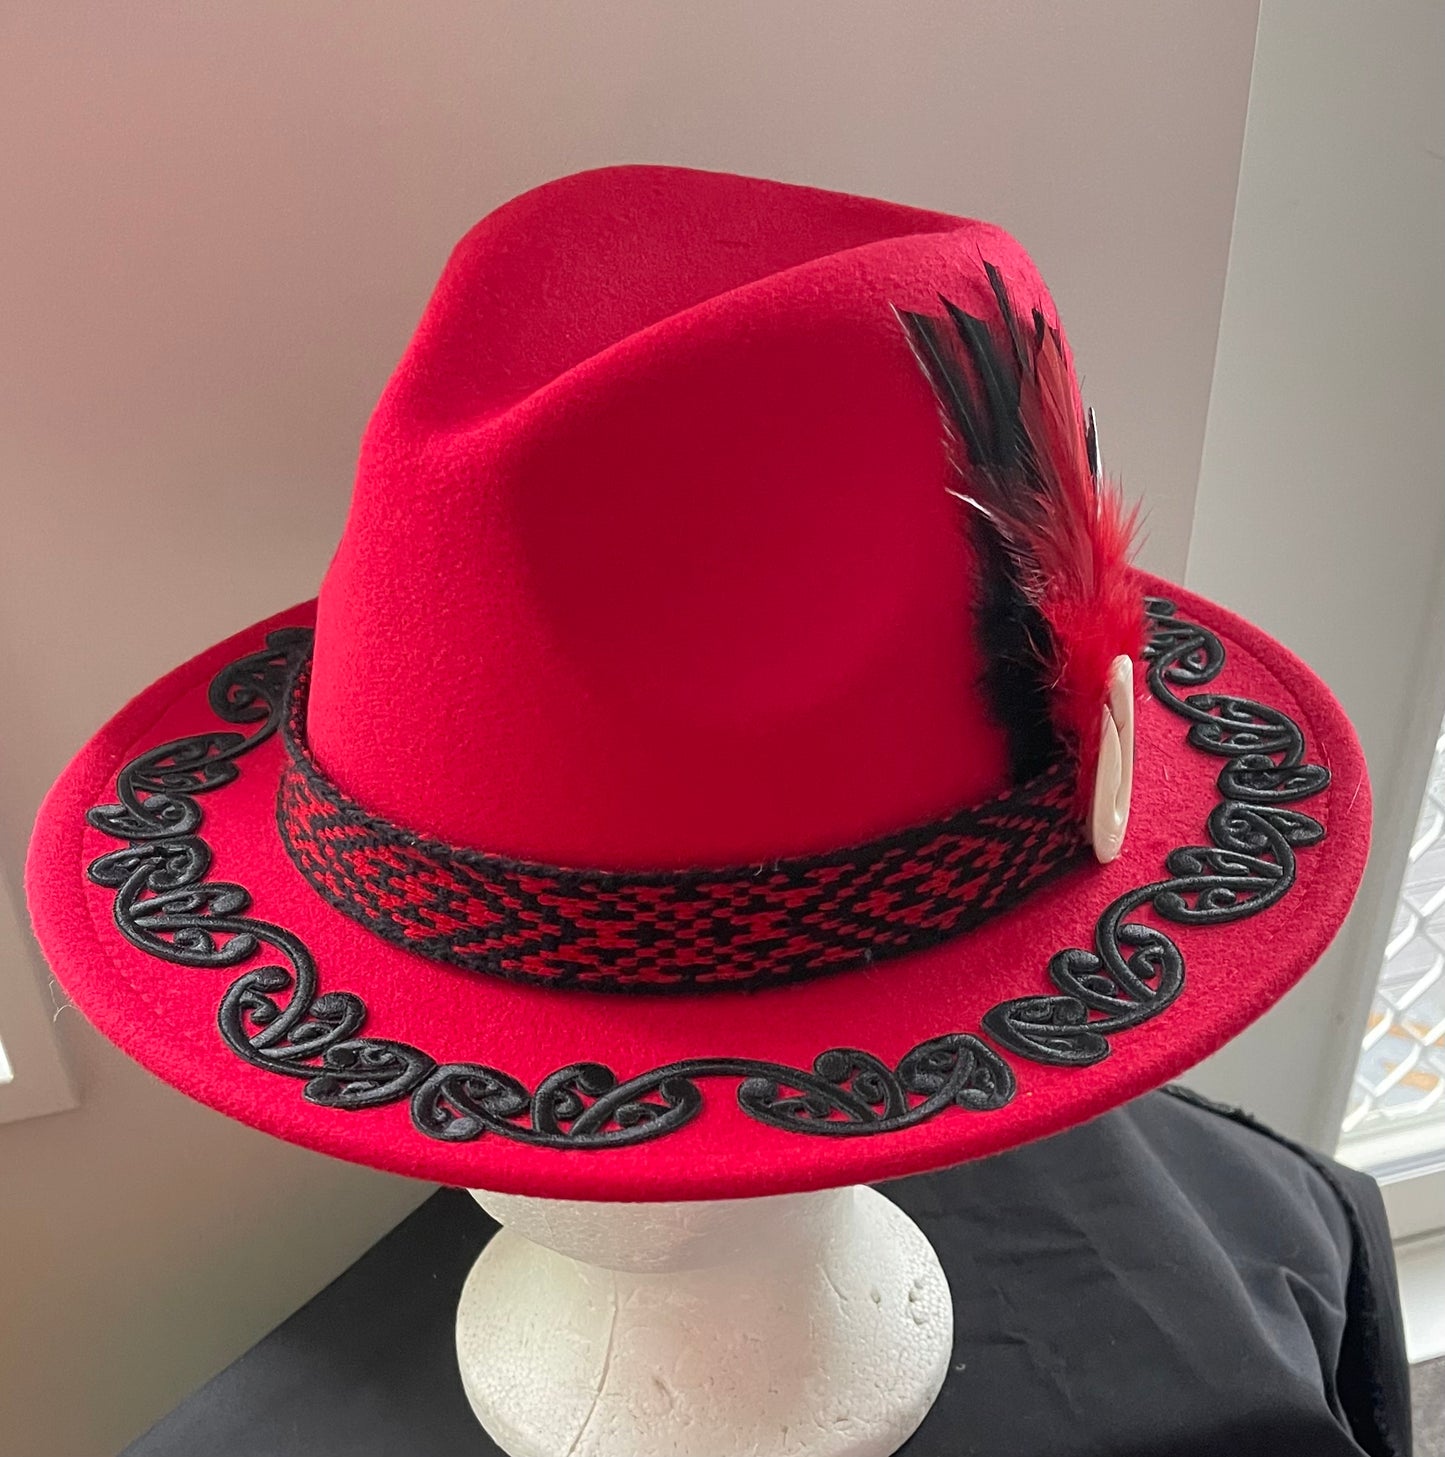 Potae - Red Fedora Felt Hat